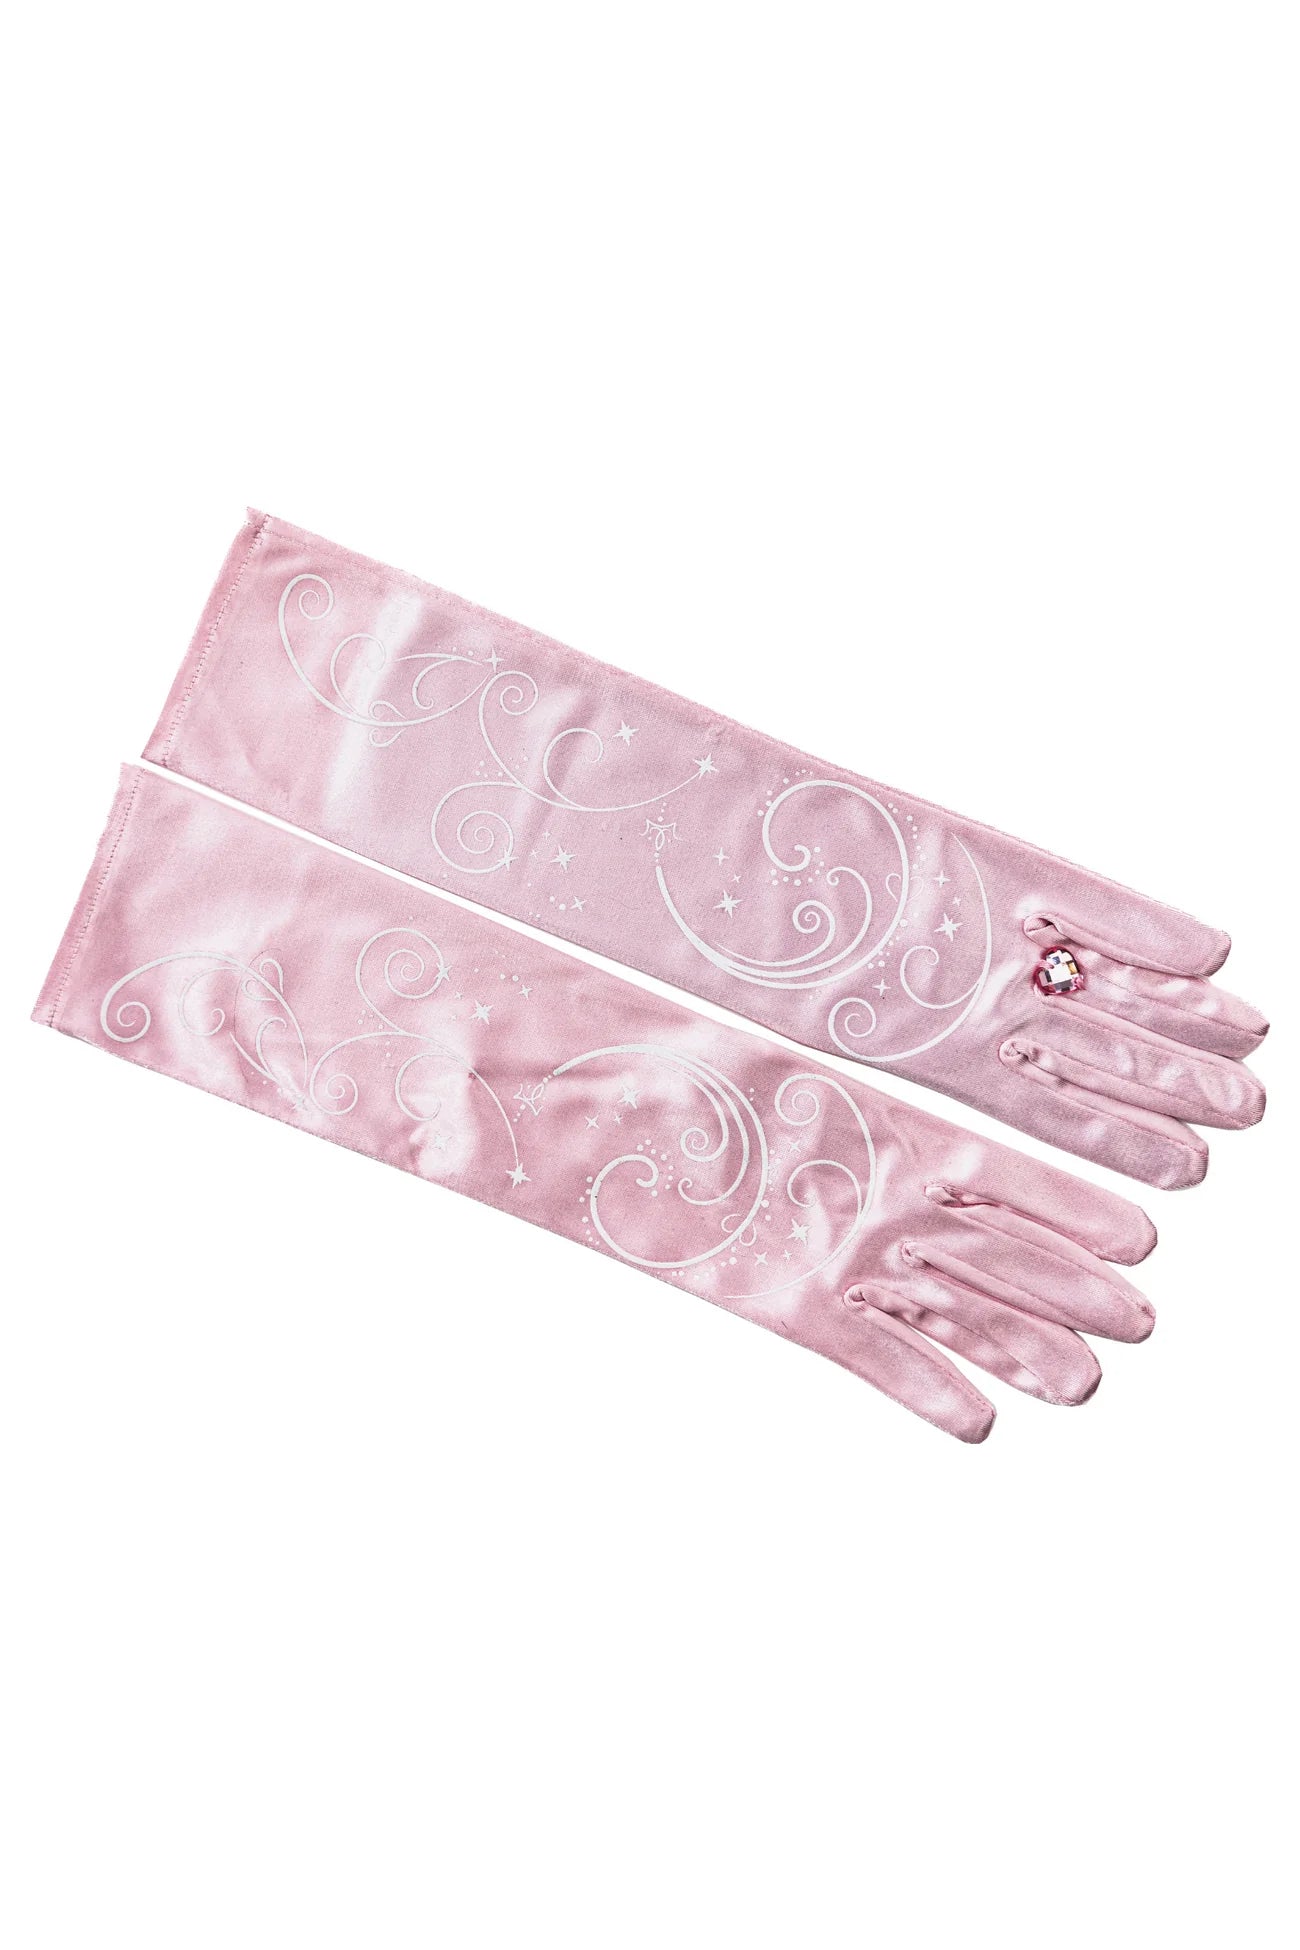 Light Pink Gloves